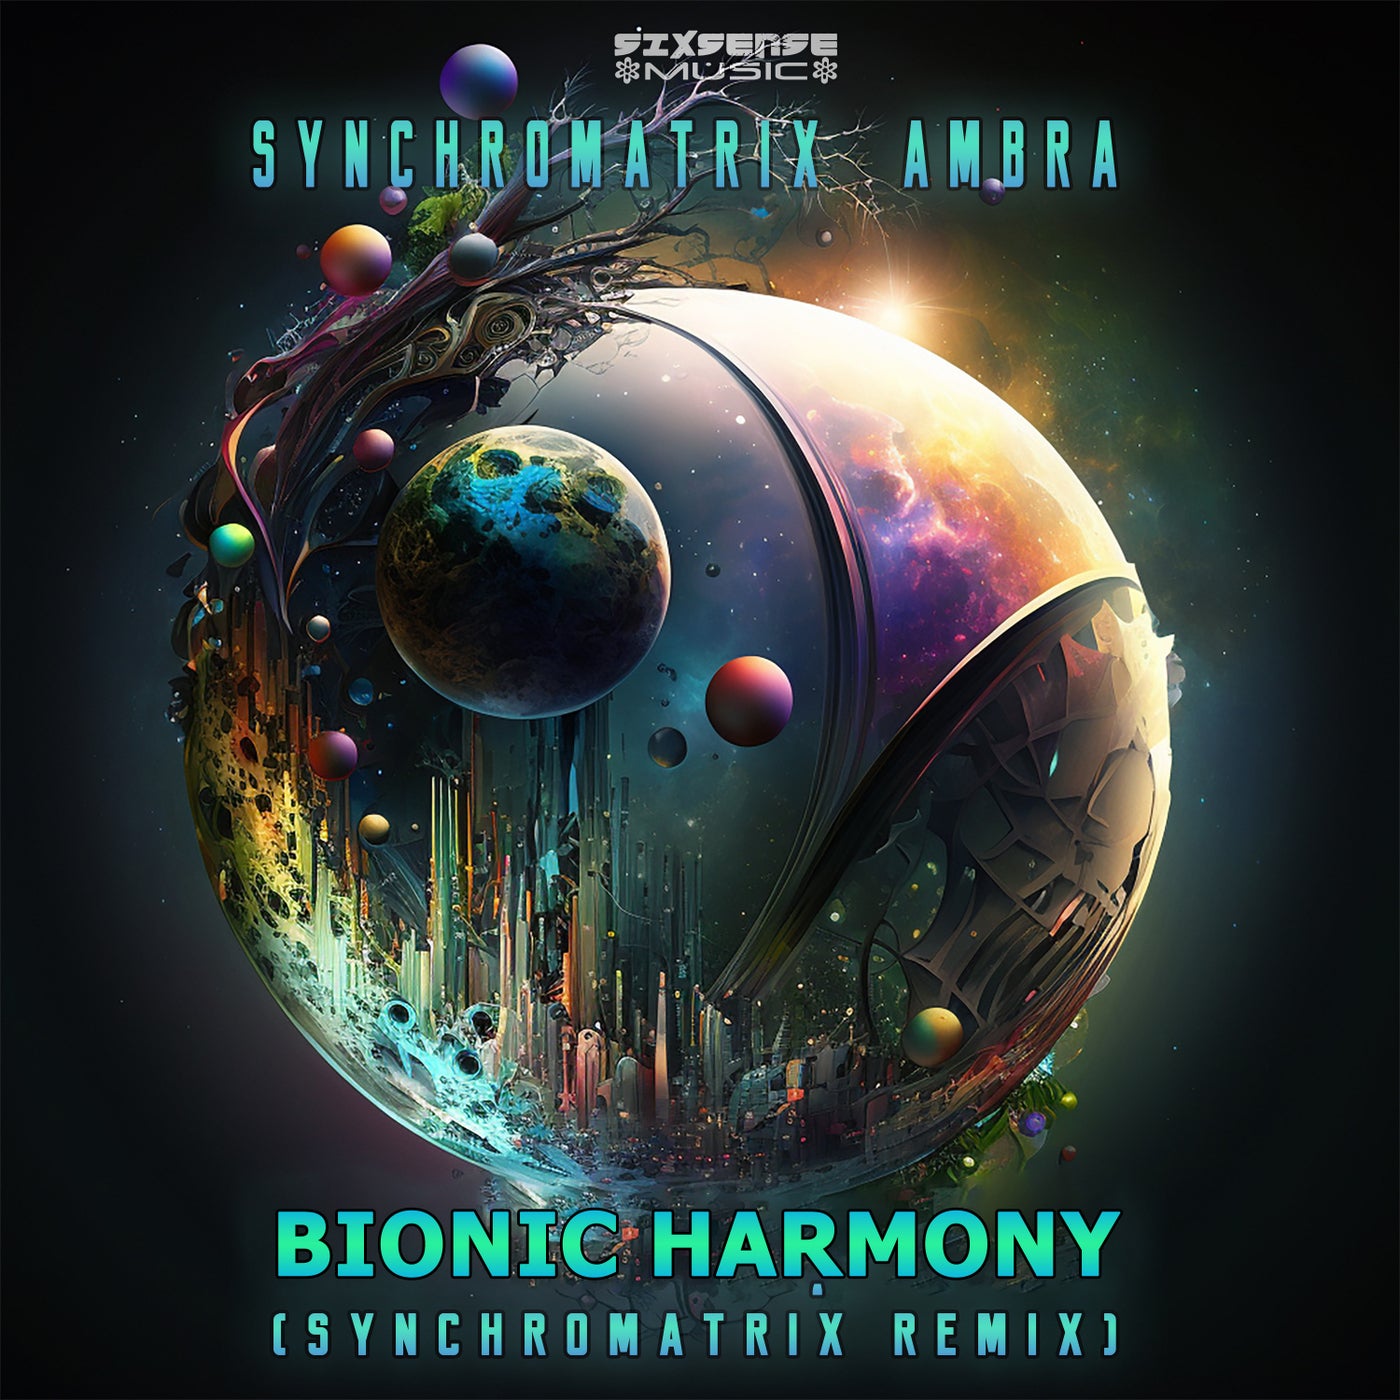 Bionic Harmony (Synchromatrix Remix)